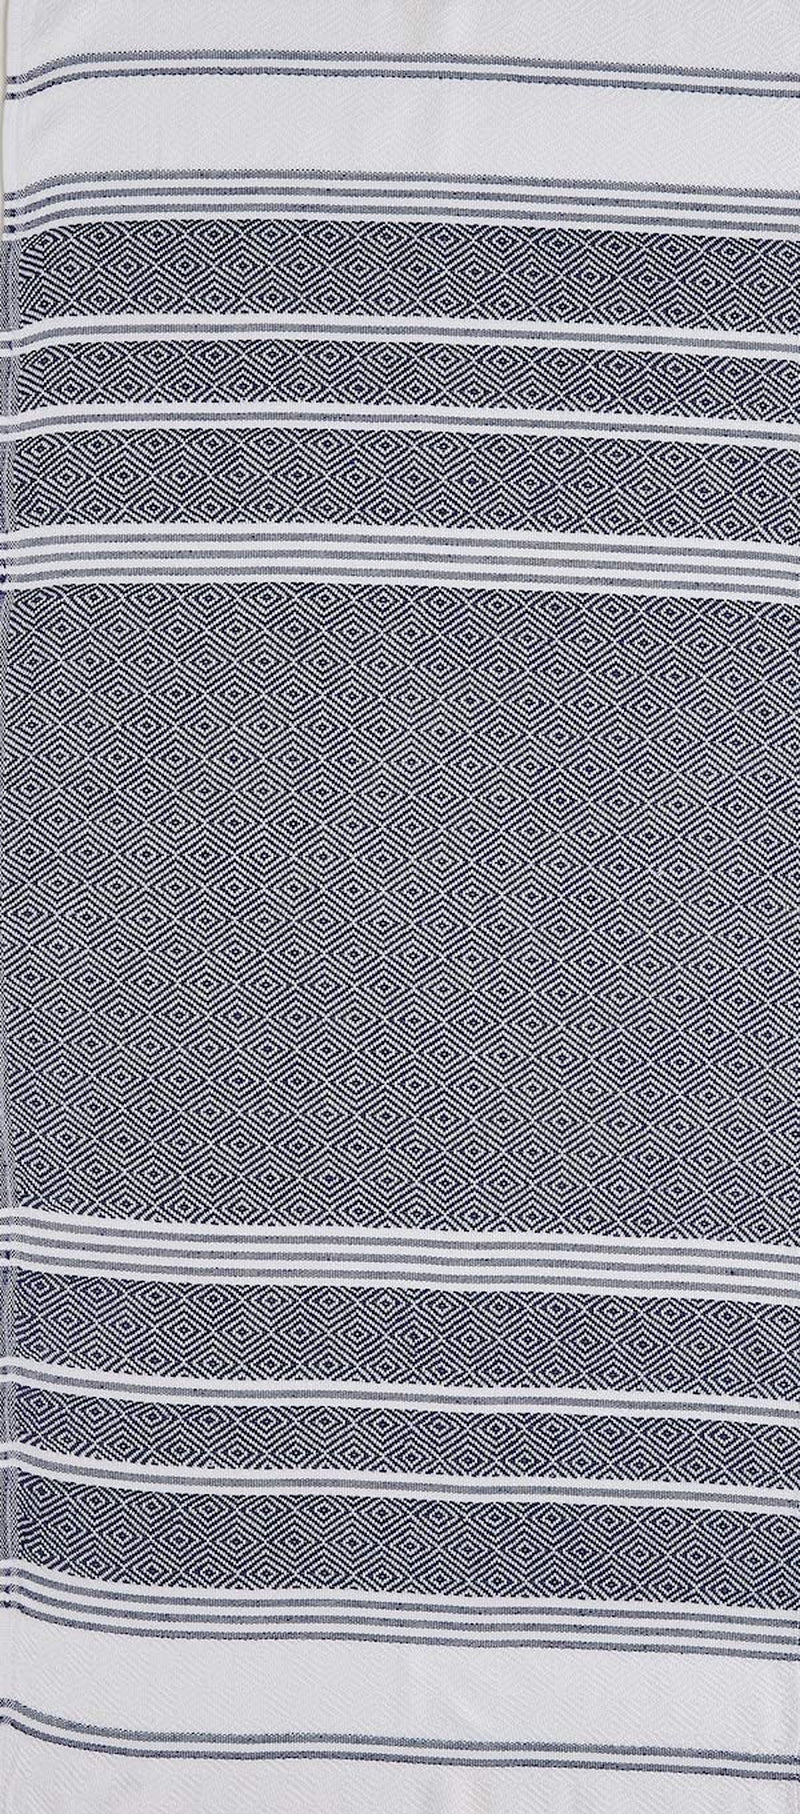 Set of 4 - Diamond Weave Turkish Cotton Bath Beach Hammam Towel Peshtemal Blanket Prewashed (Navy) Home & Garden > Linens & Bedding > Towels CopperBull   